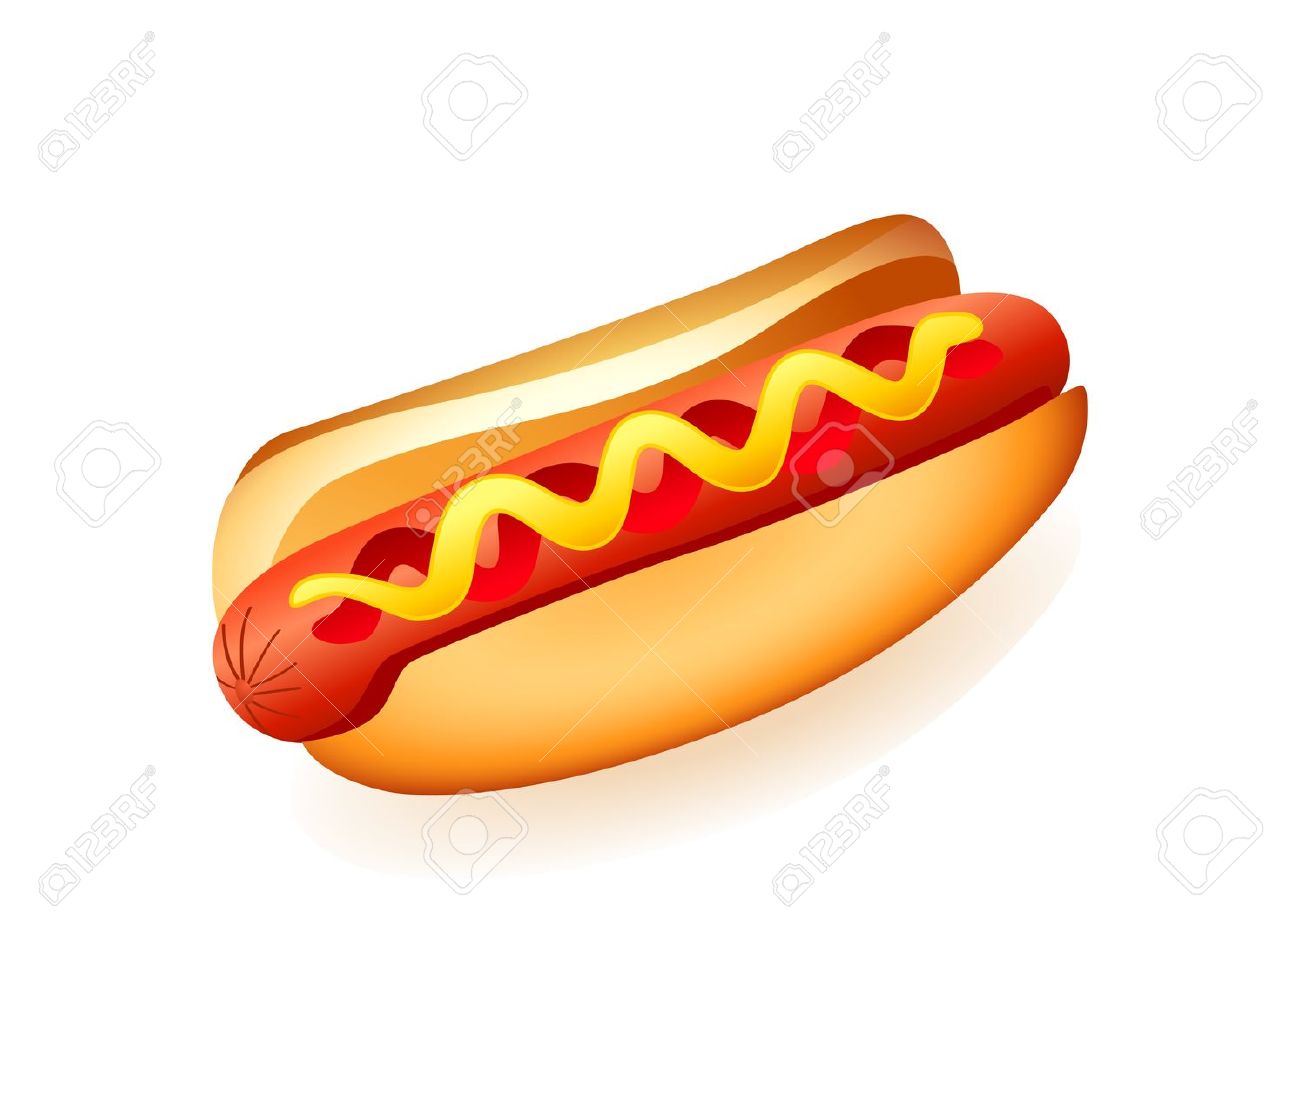 hot dog clipart images - photo #42